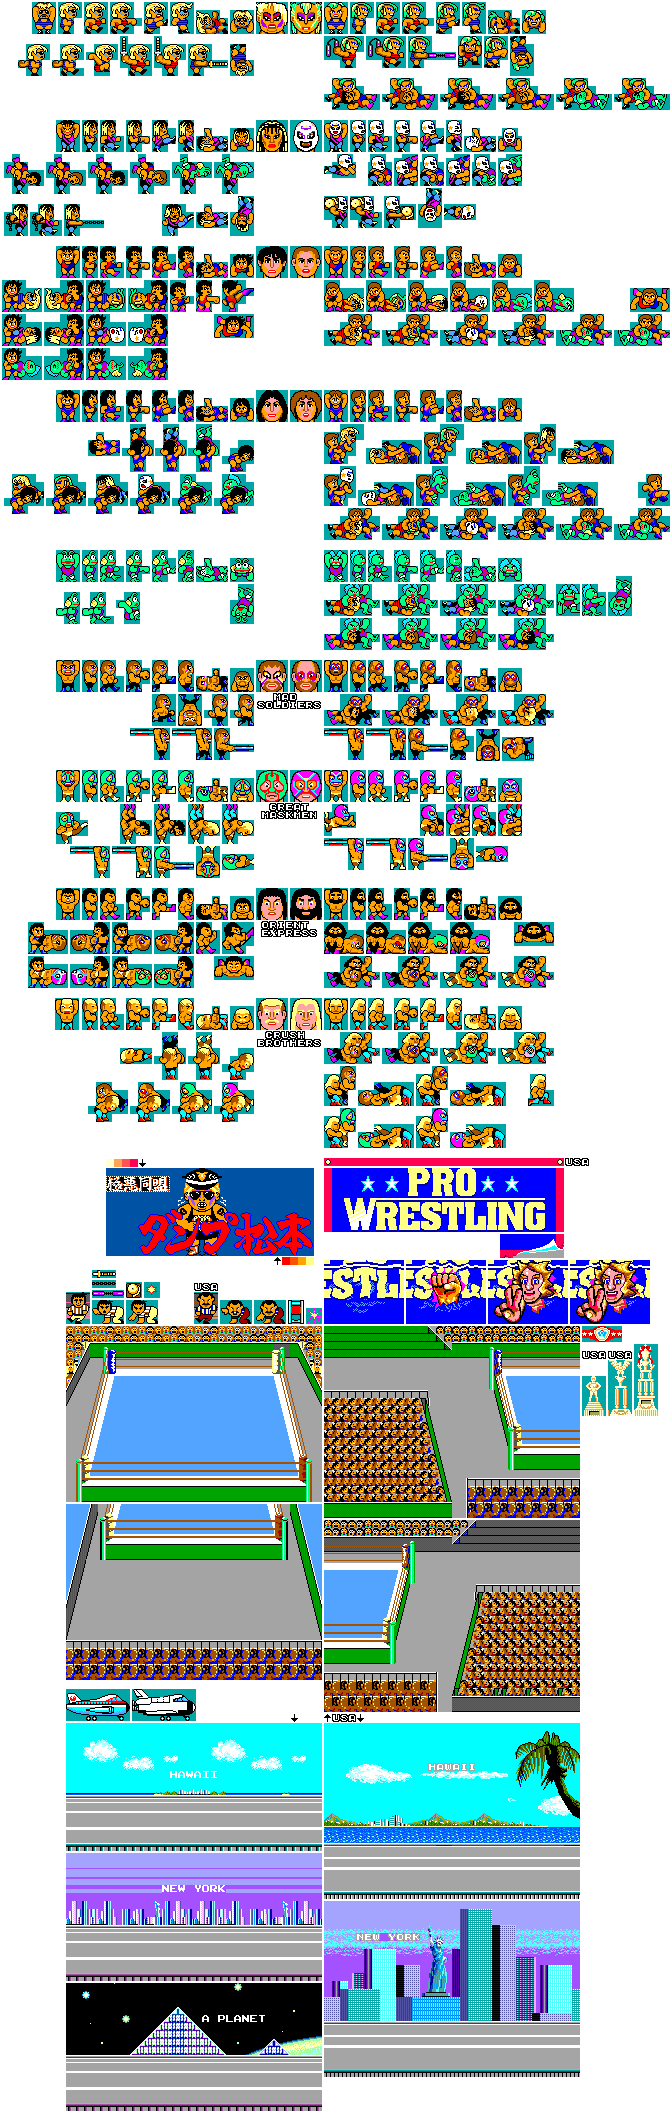 Pro Wrestling - Wrestlers & Screens